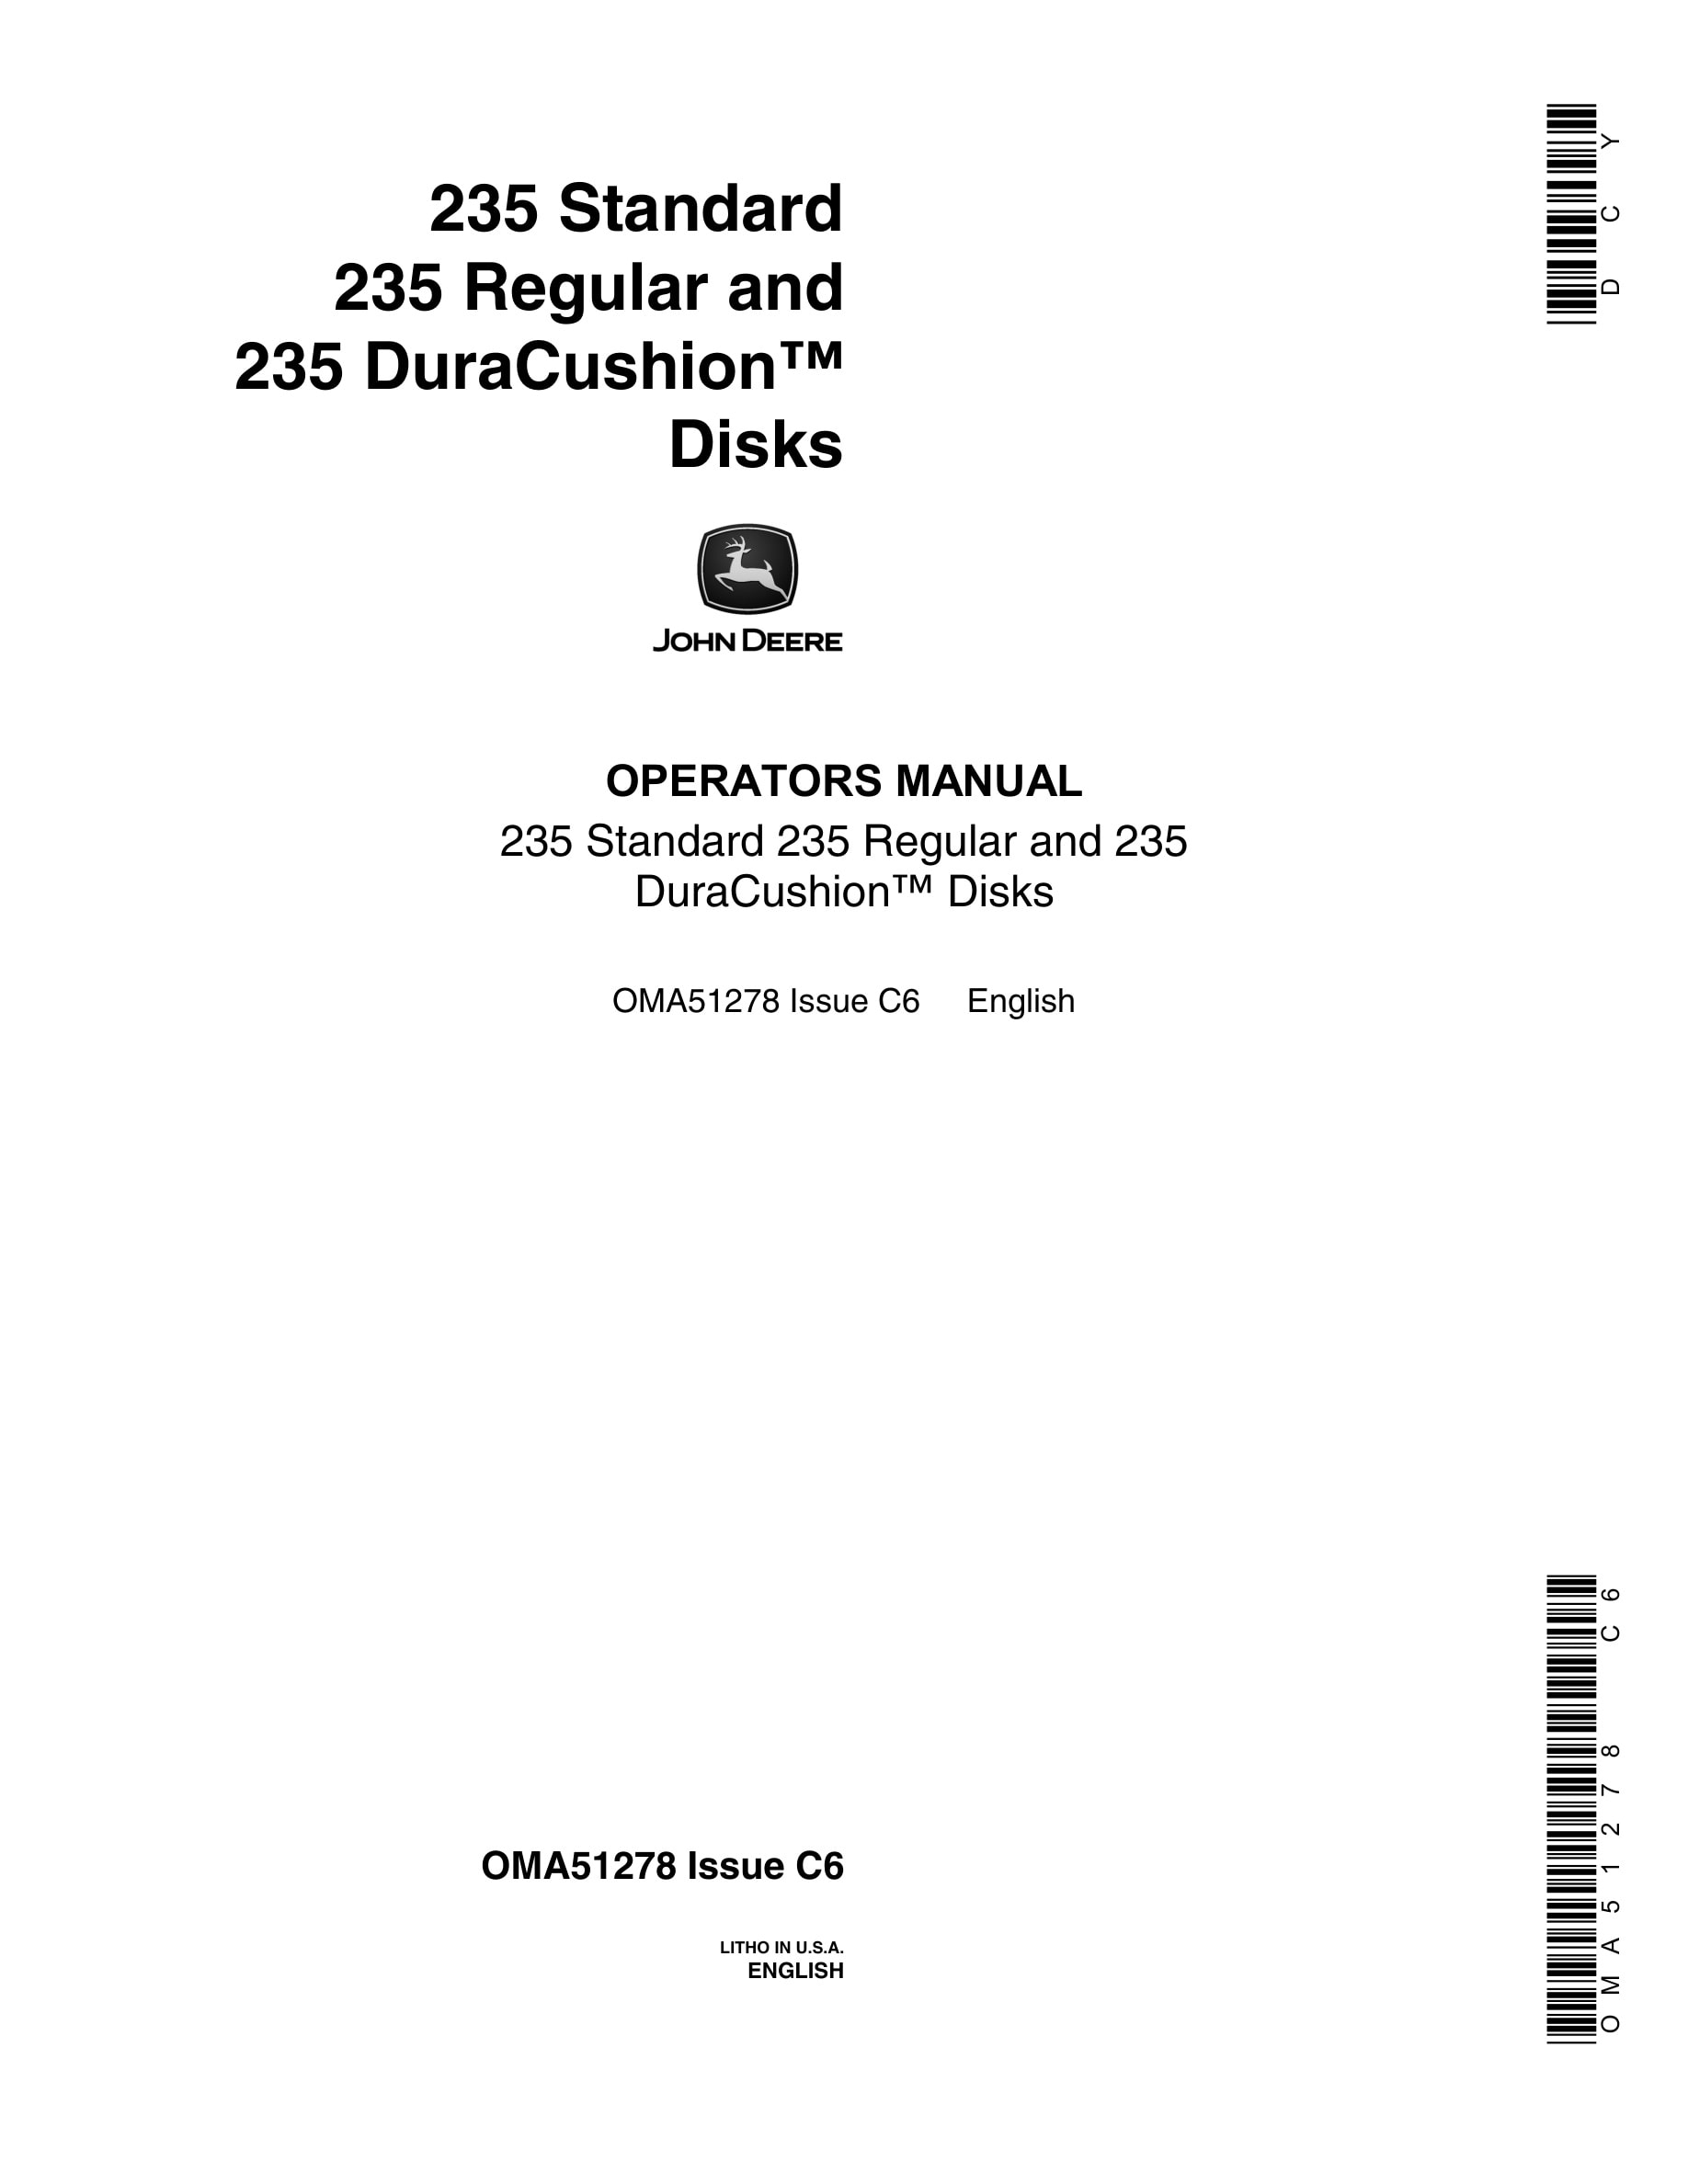 John Deere 235 Standard 235 Regular and 235 DuraCushion Disks Operator Manual OMA51278-1